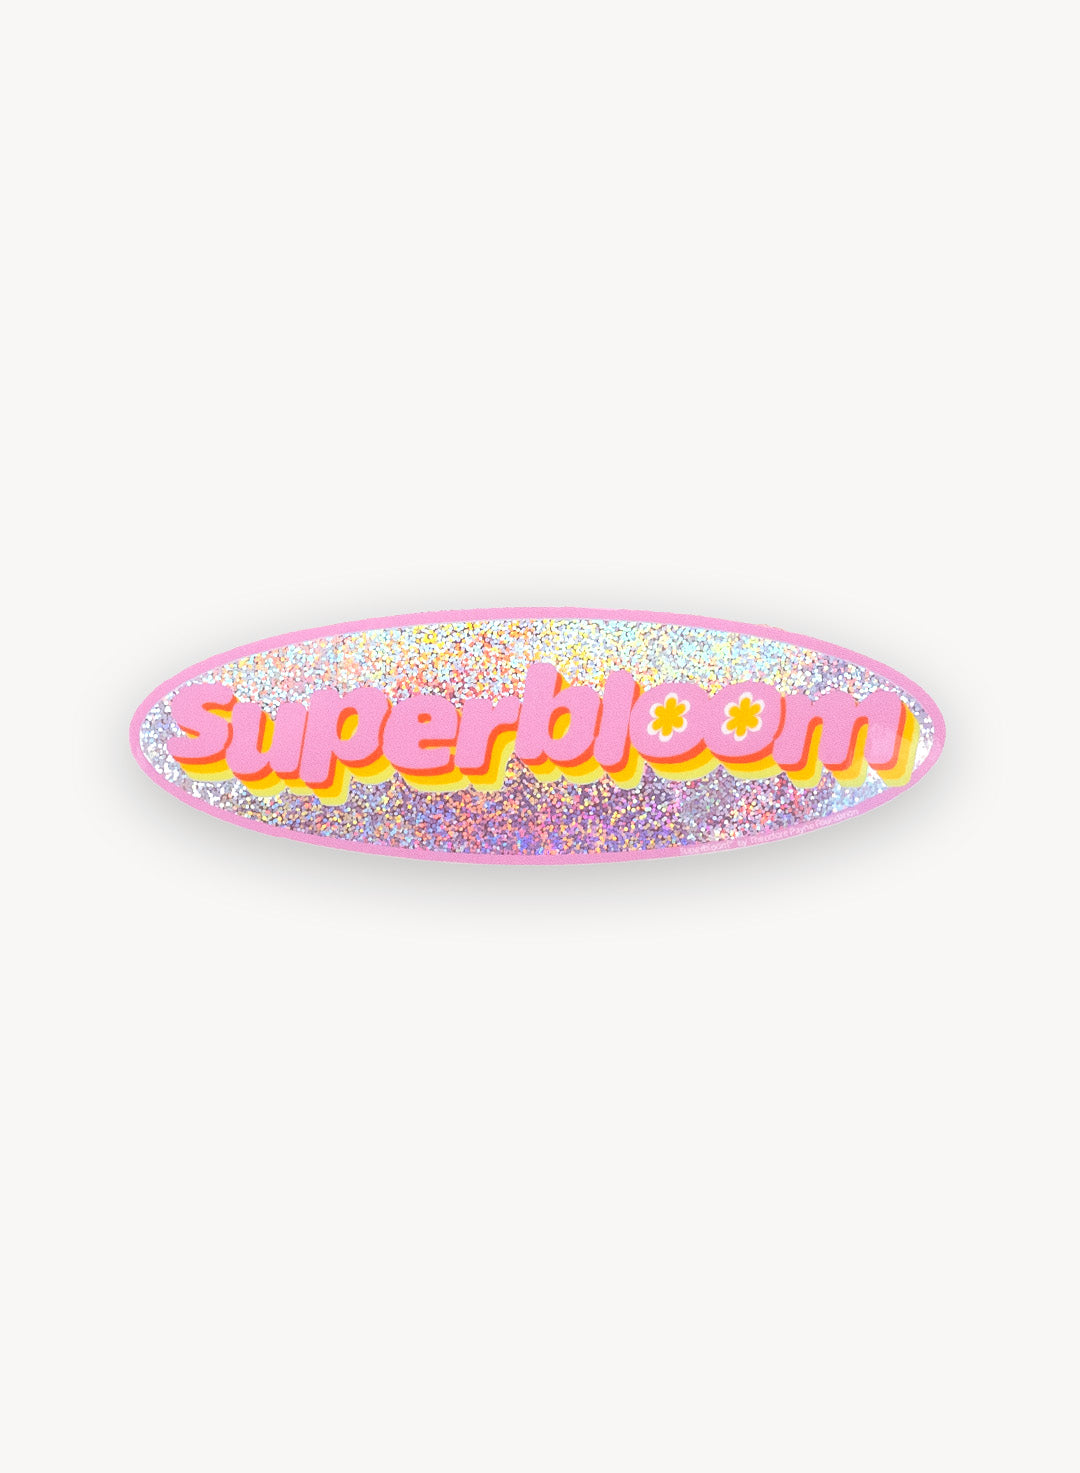 Superbloom-GlitterSticker.jpg